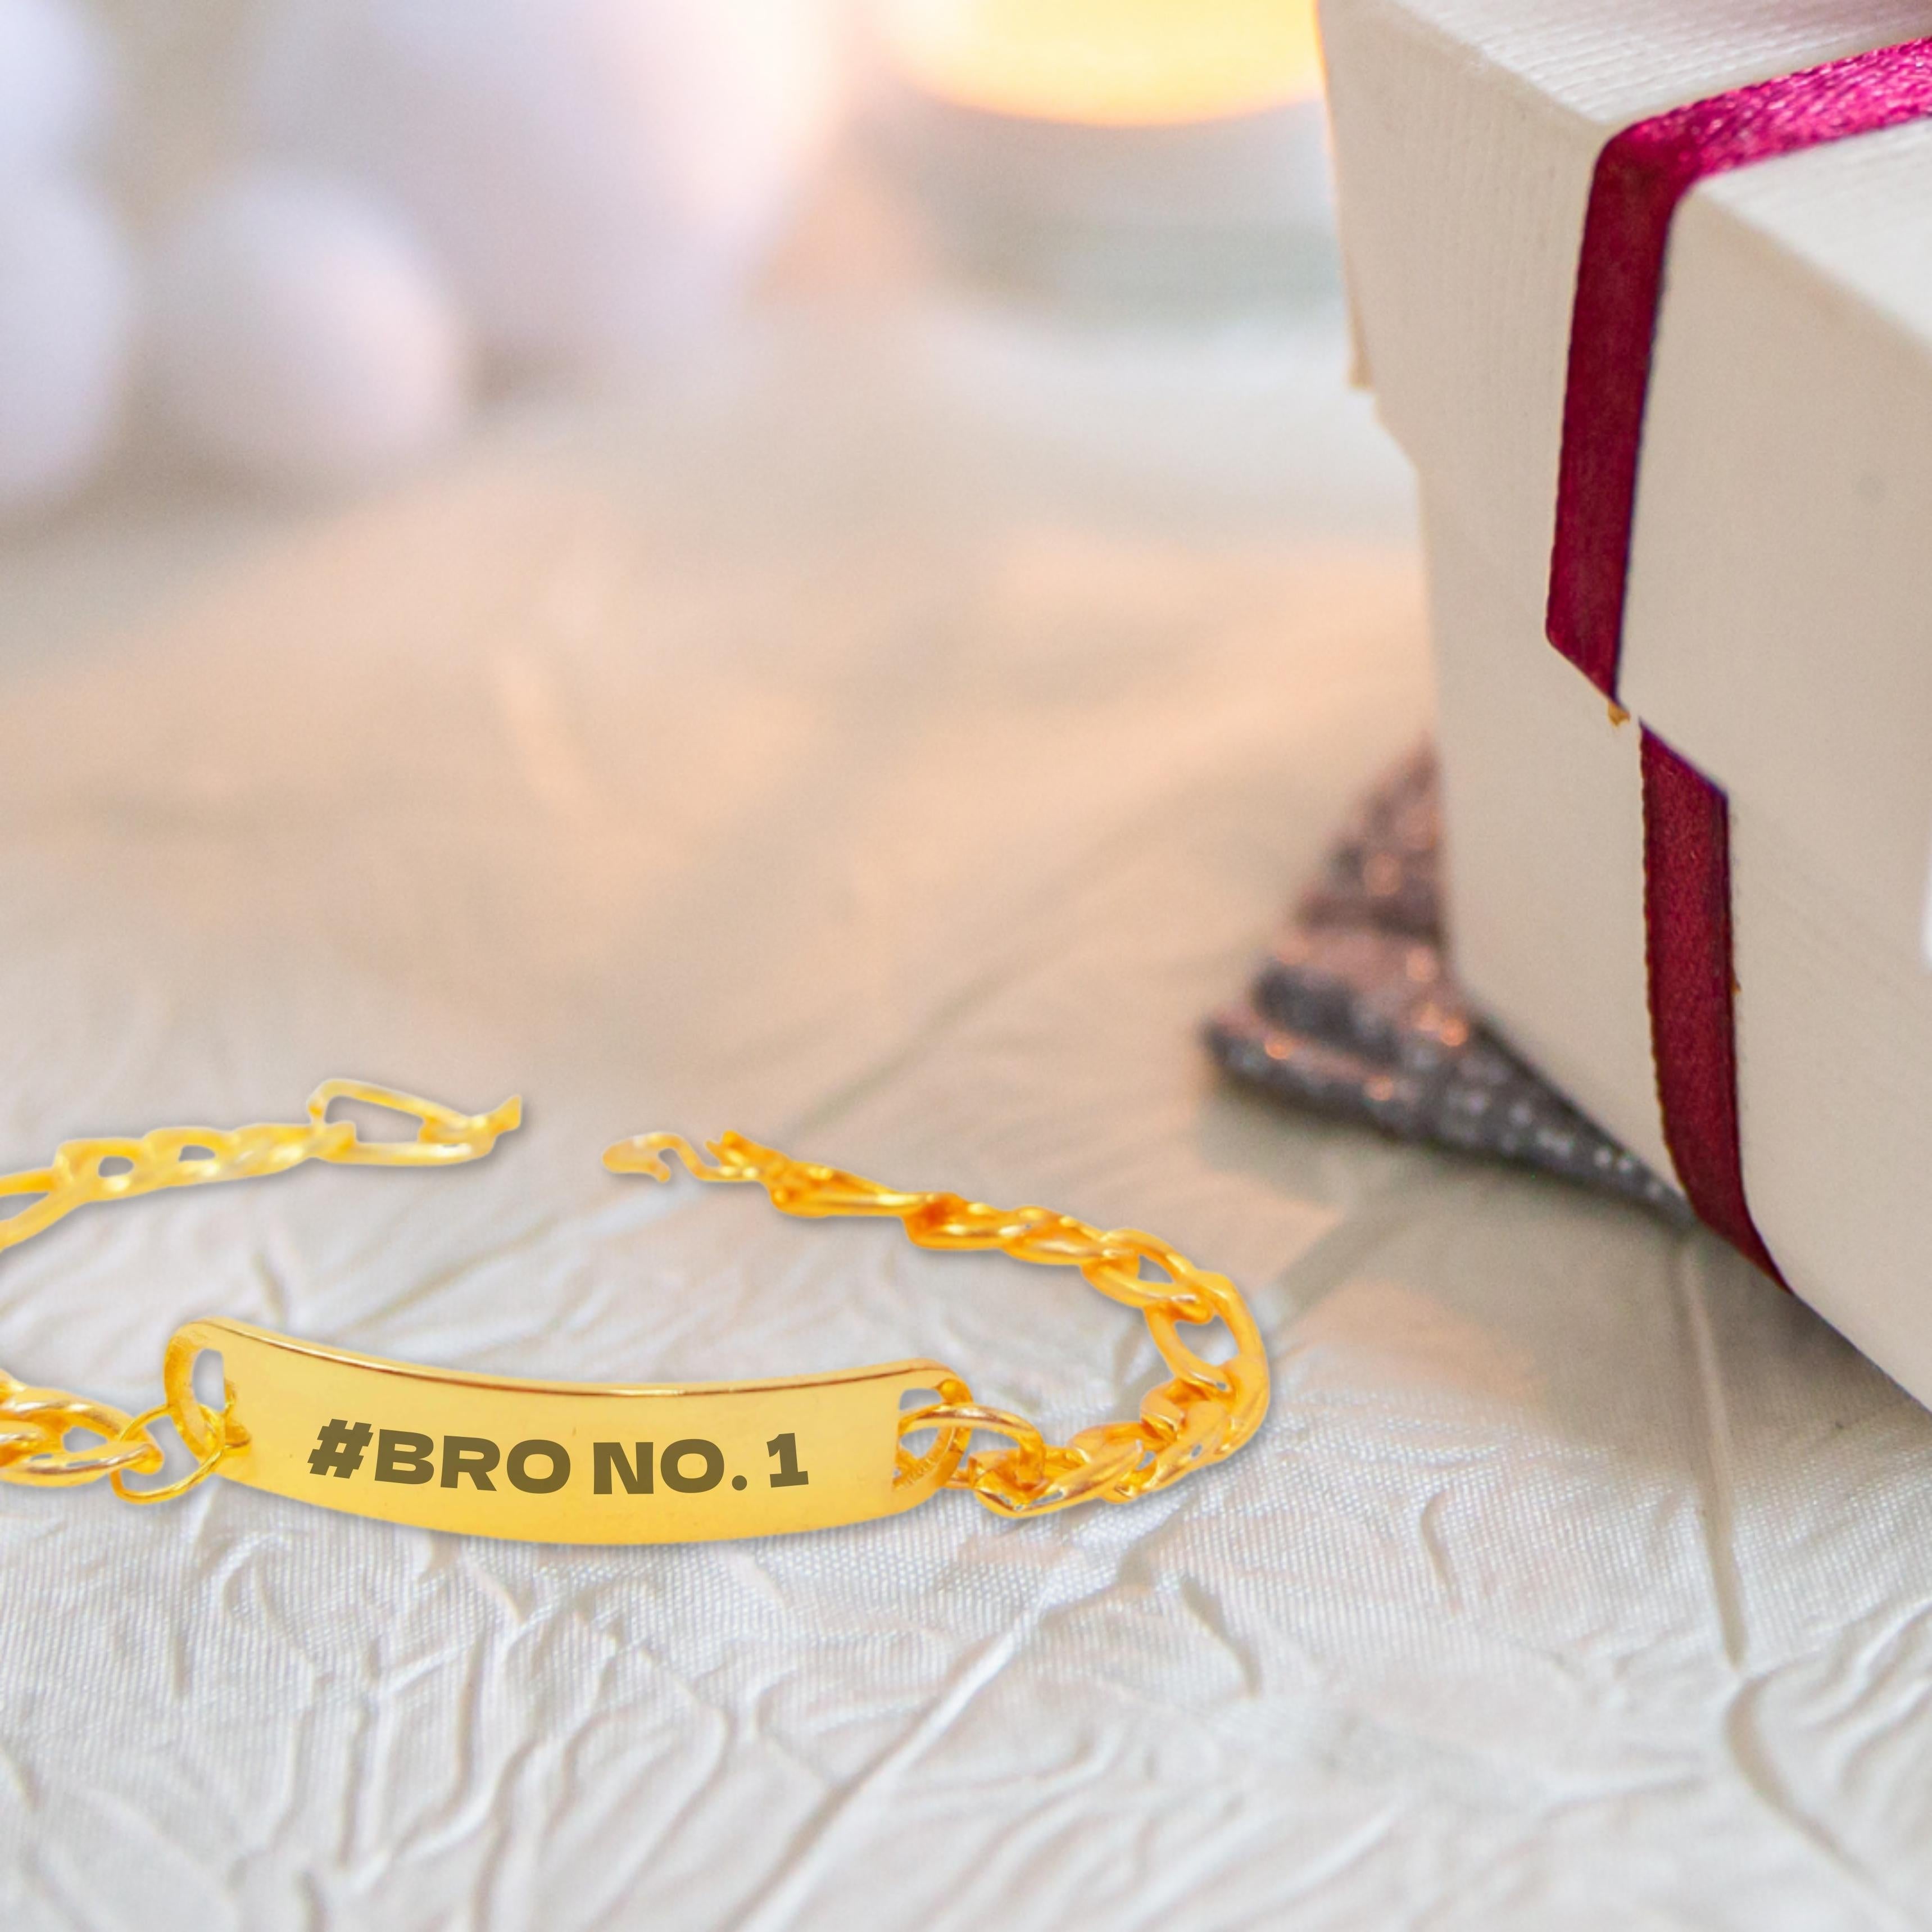 Raksha Bandhan Gift Ideas For Brother Stylish Bracelet – Nutcase